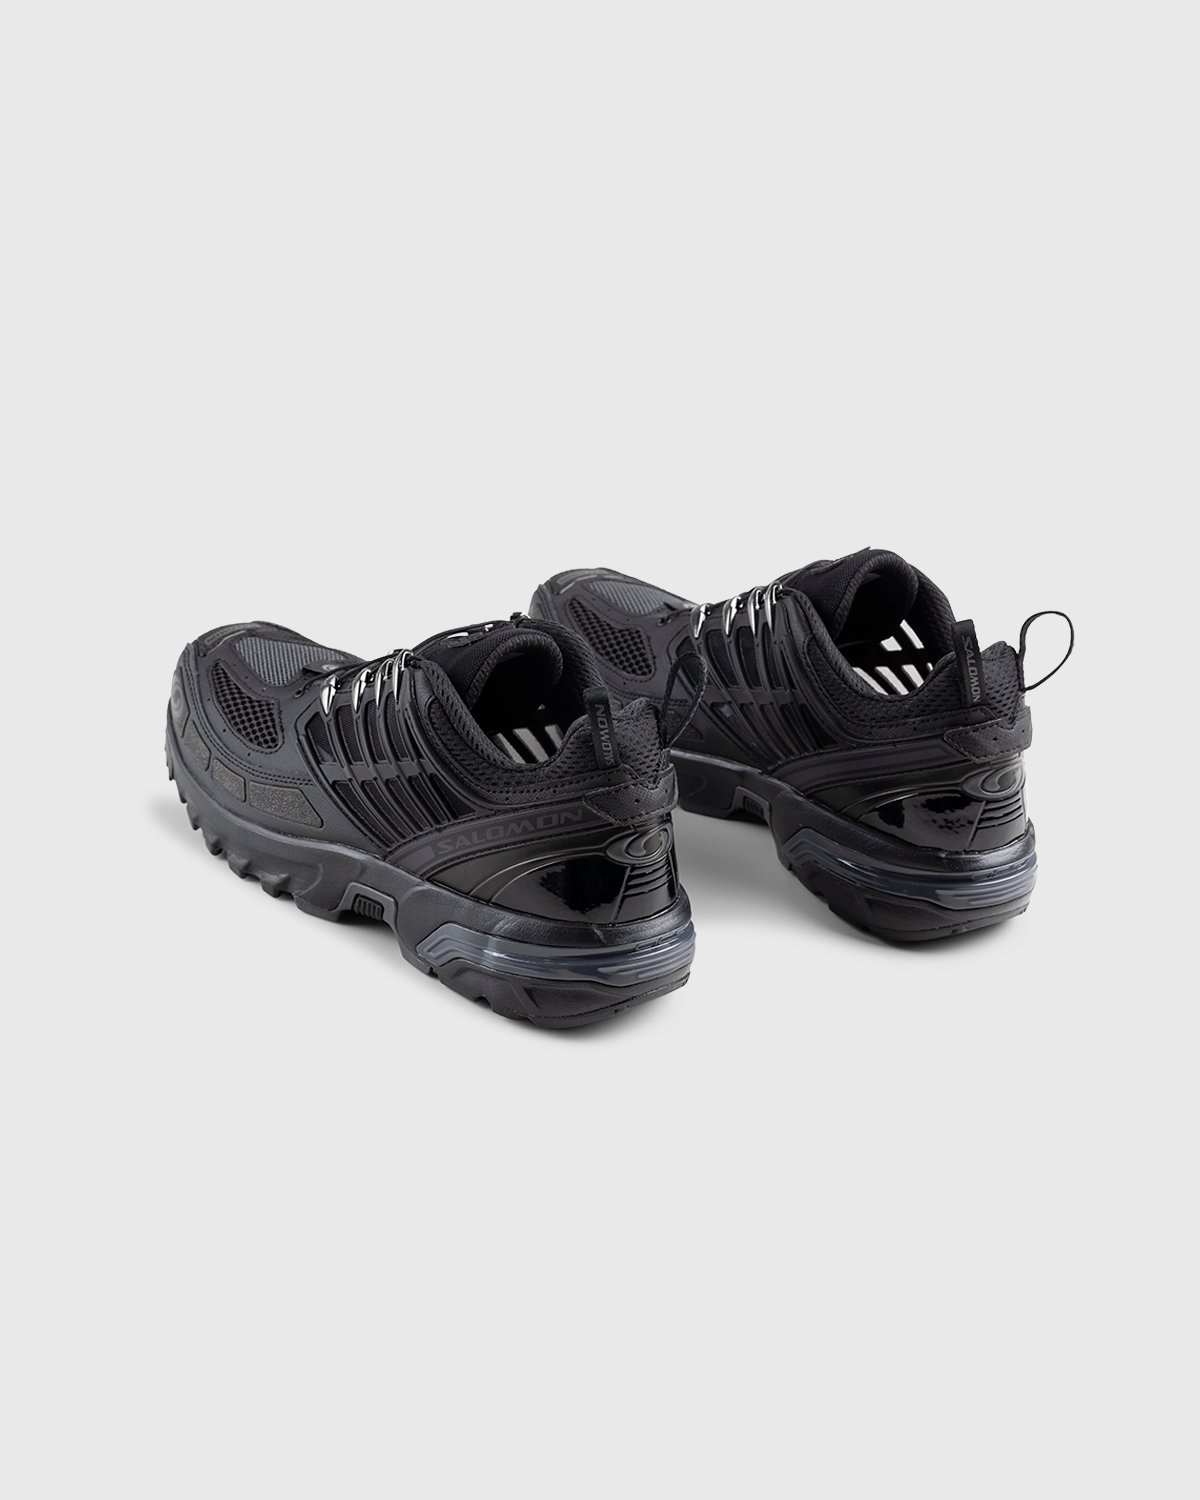 Salomon - ACS PRO Black/Black/Black - Low Top Sneakers - Black - Image 4